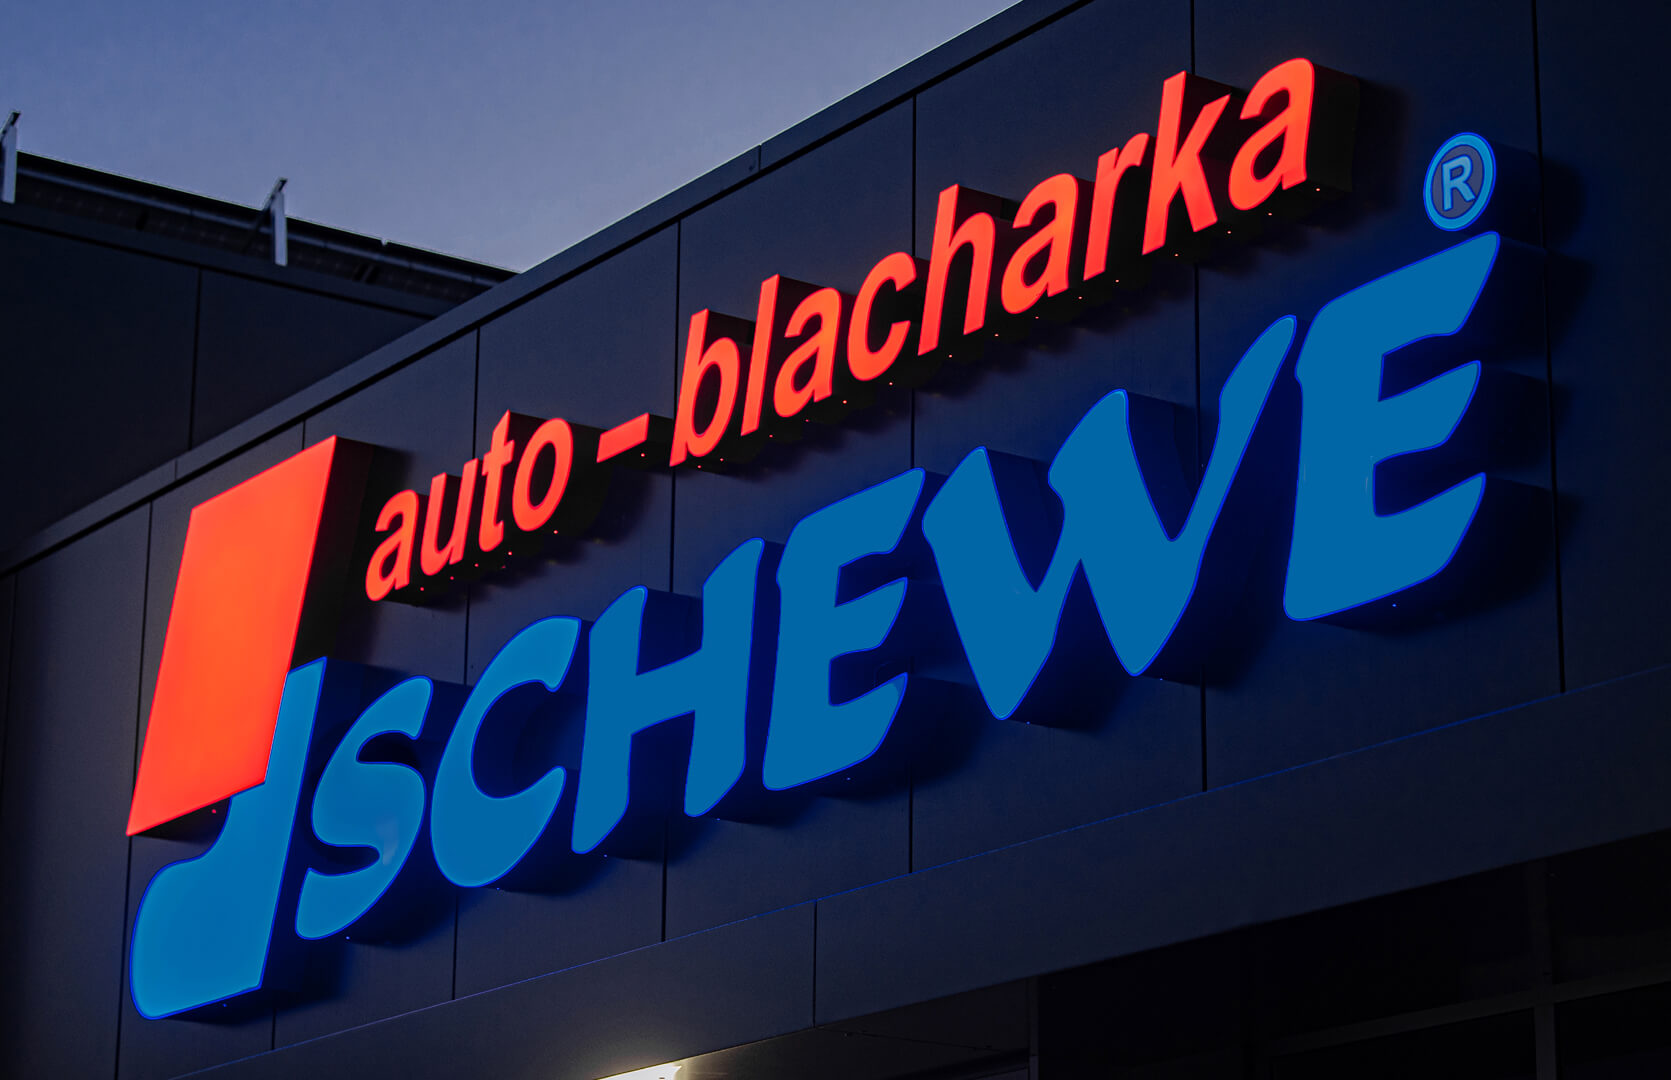 Auto blacharka Schewe - Carrocería automática, letras apaisadas con iluminación LED.